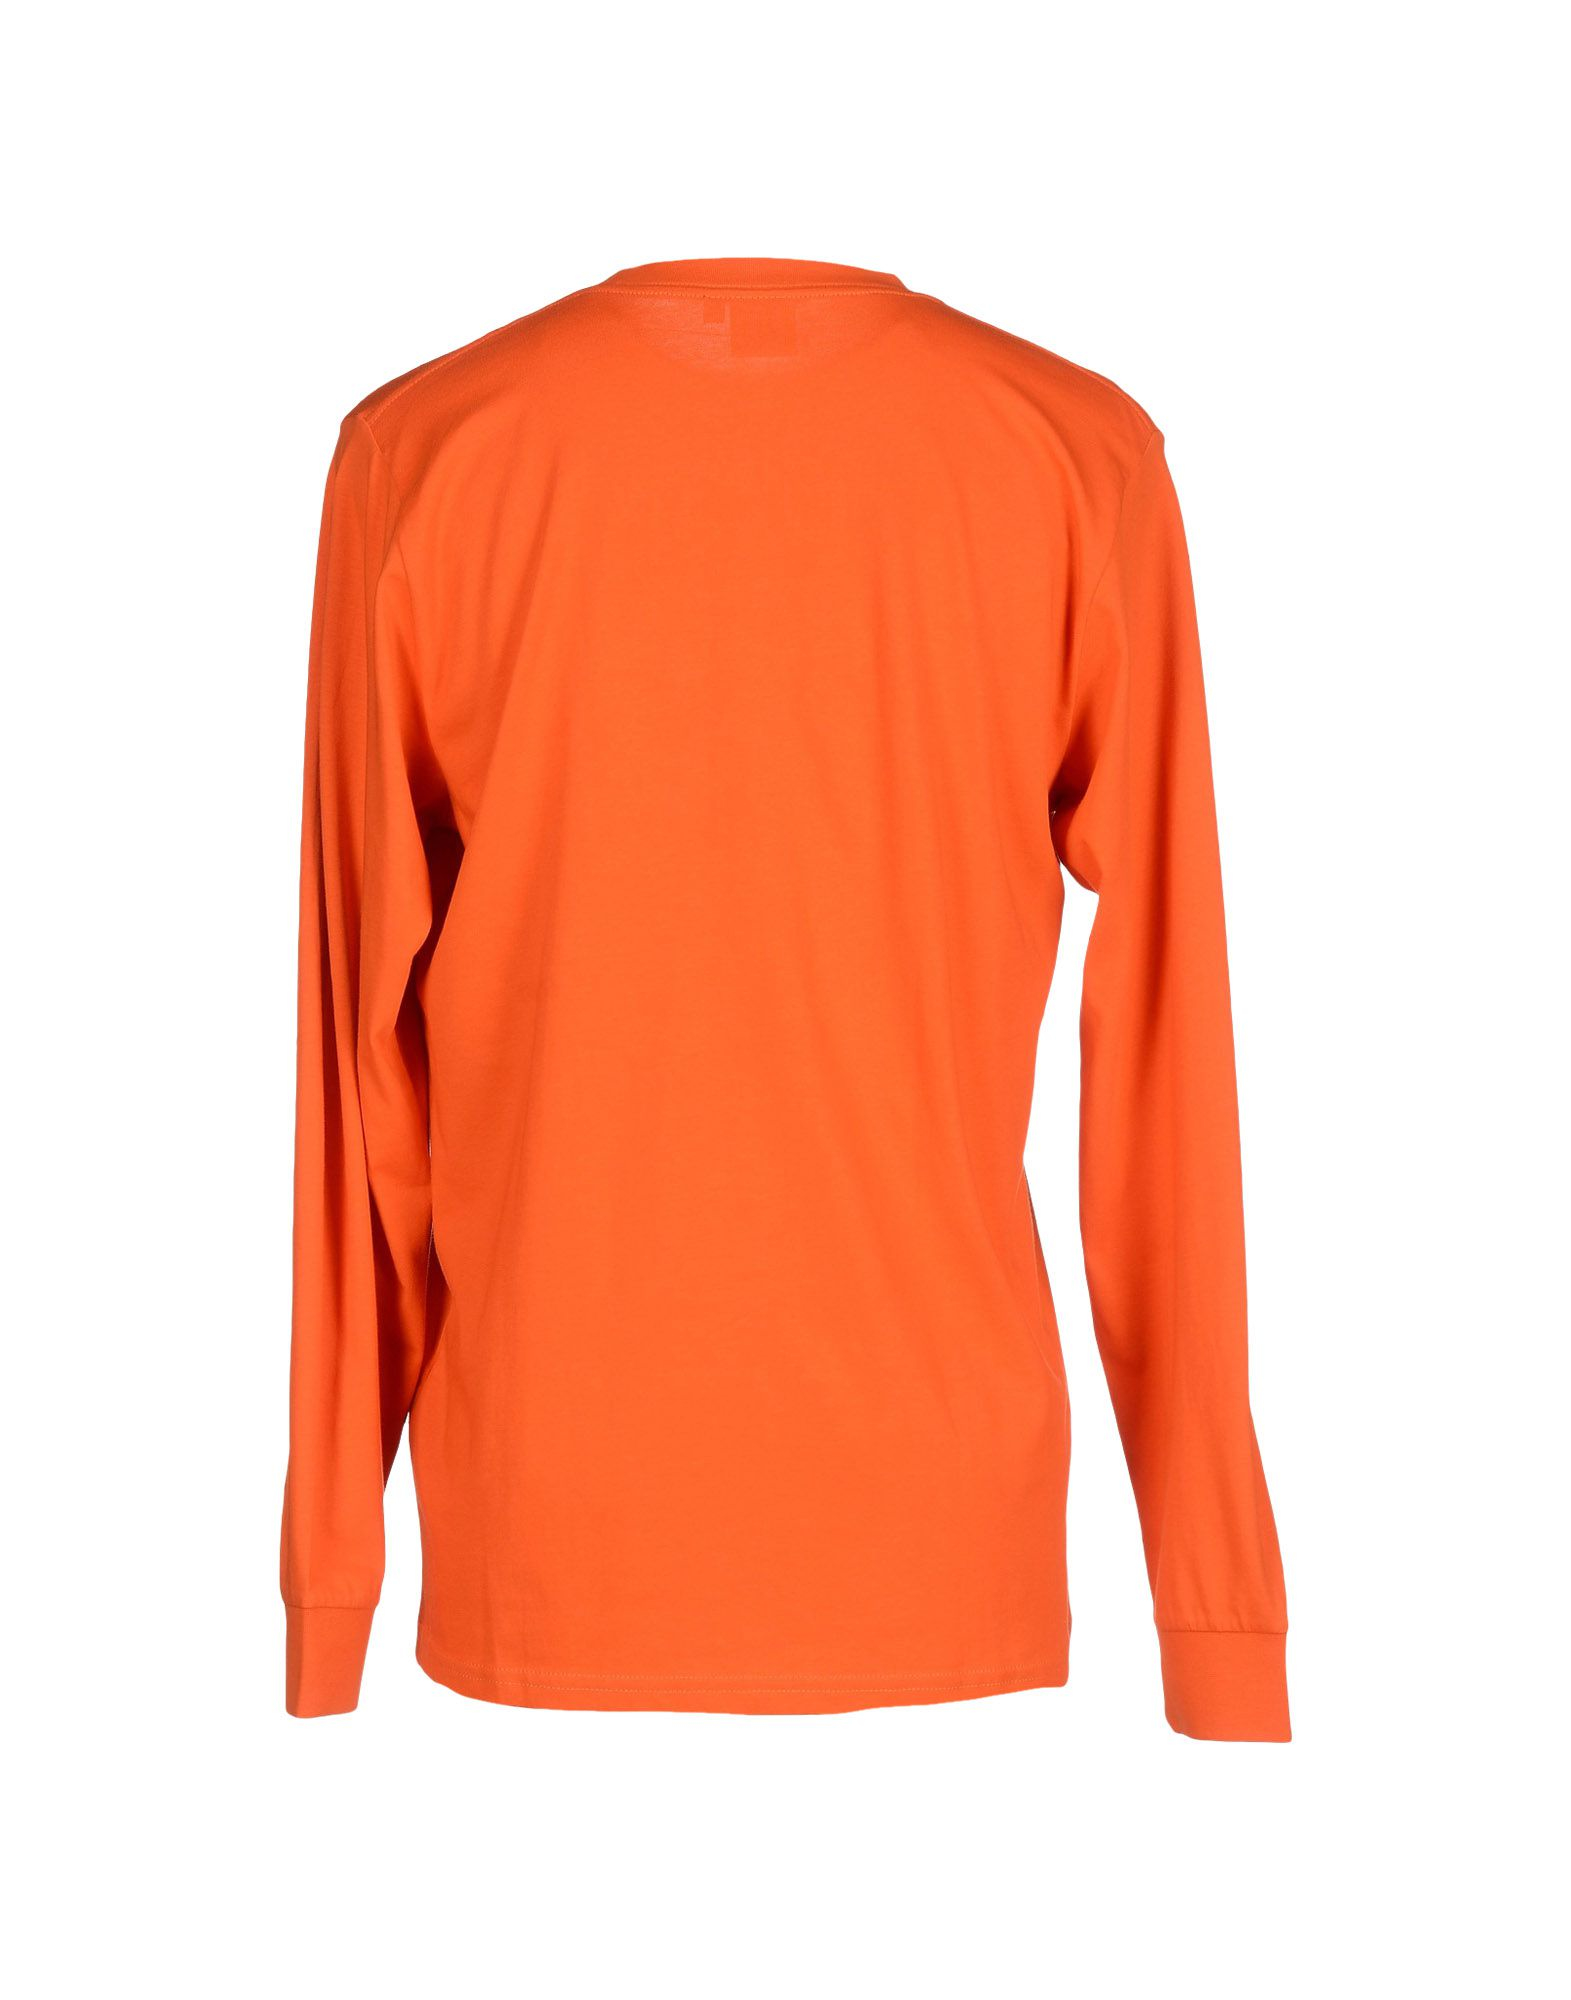 Carhartt T-shirt in Orange for Men | Lyst